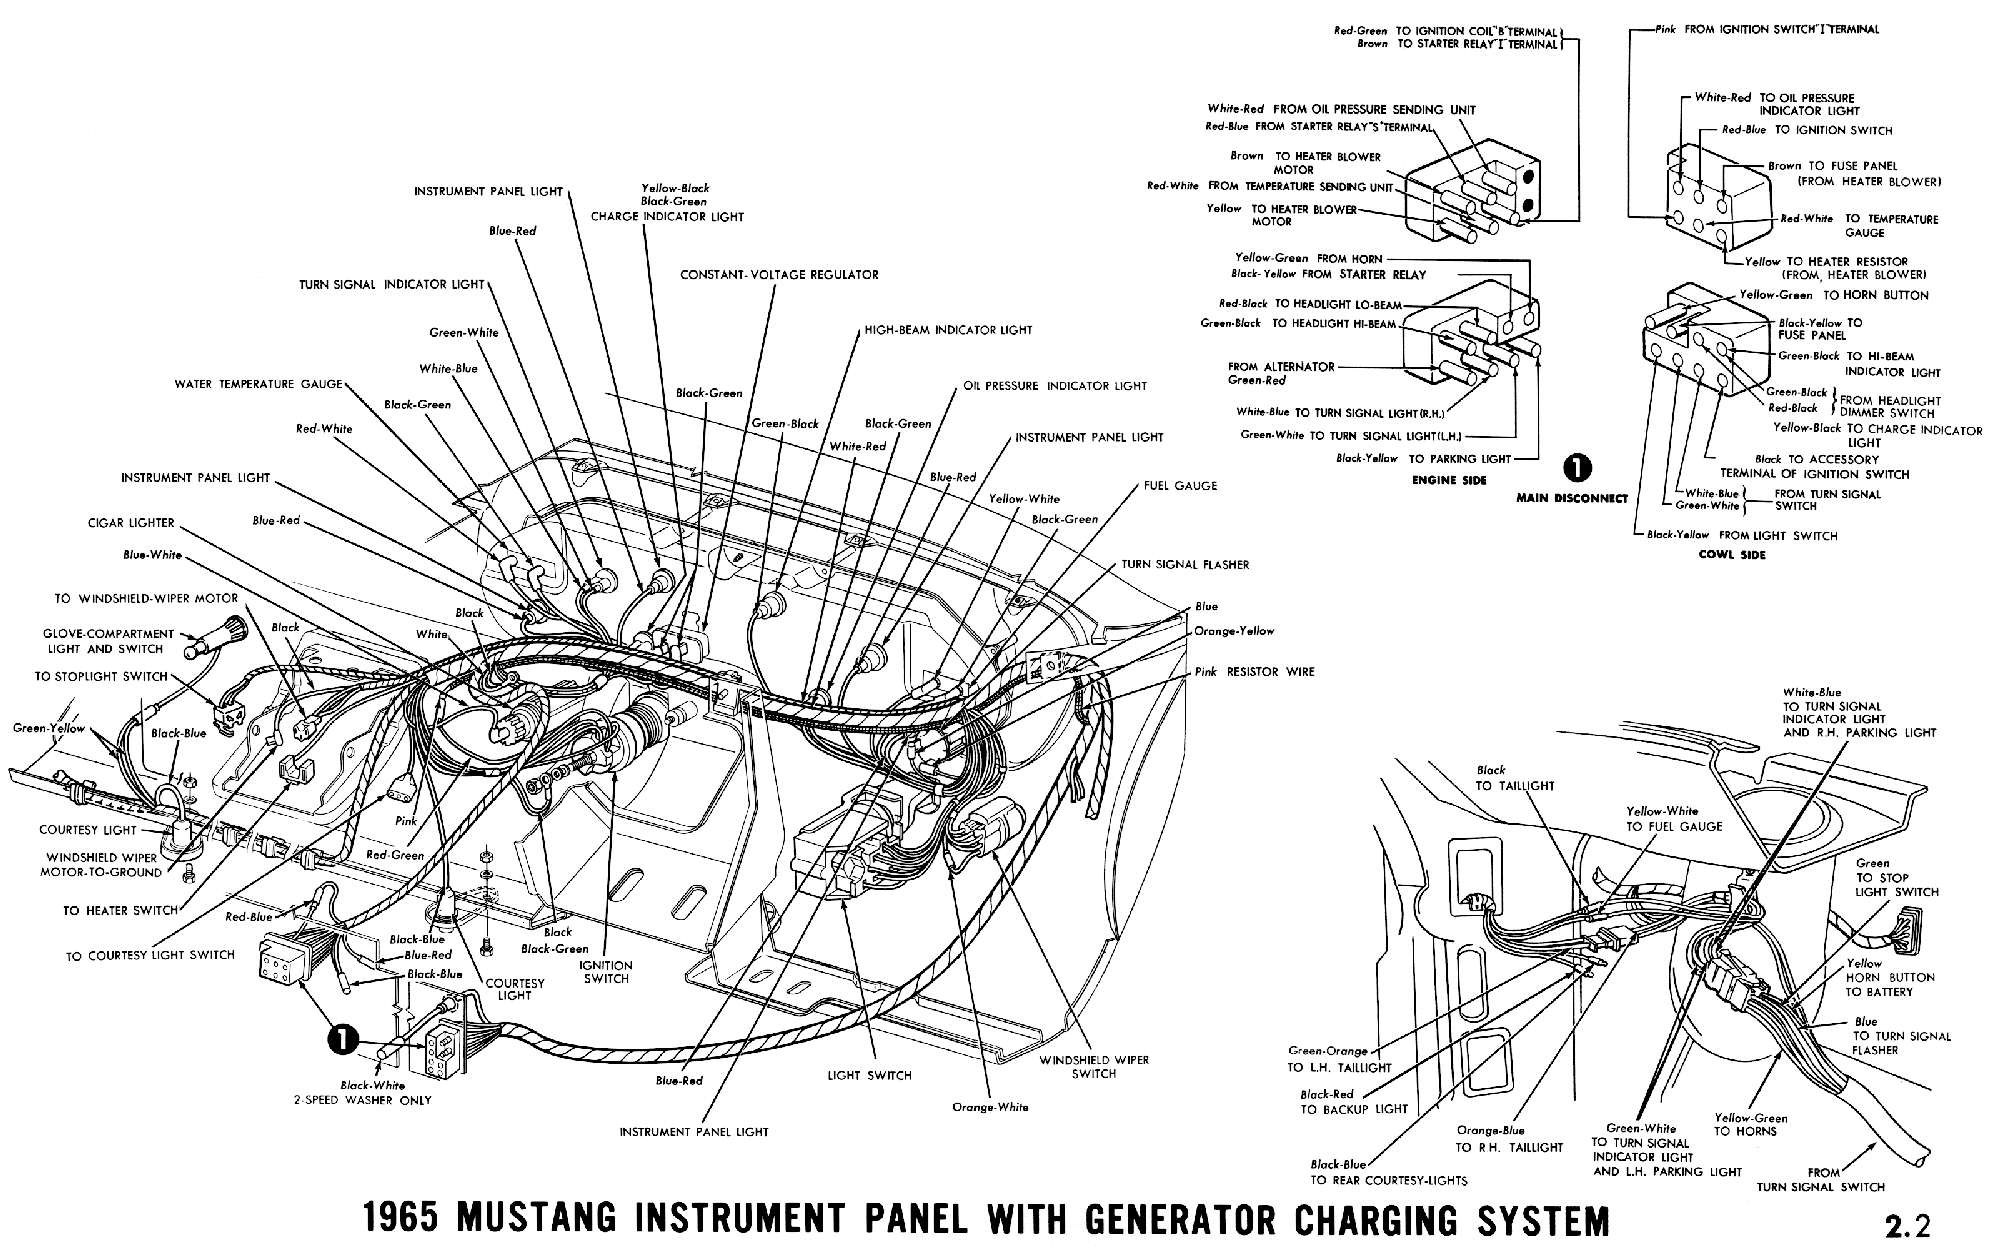 1965 Mustang Wiring Diagrams - Average Joe Restoration - Ford Wiring Harness Diagram